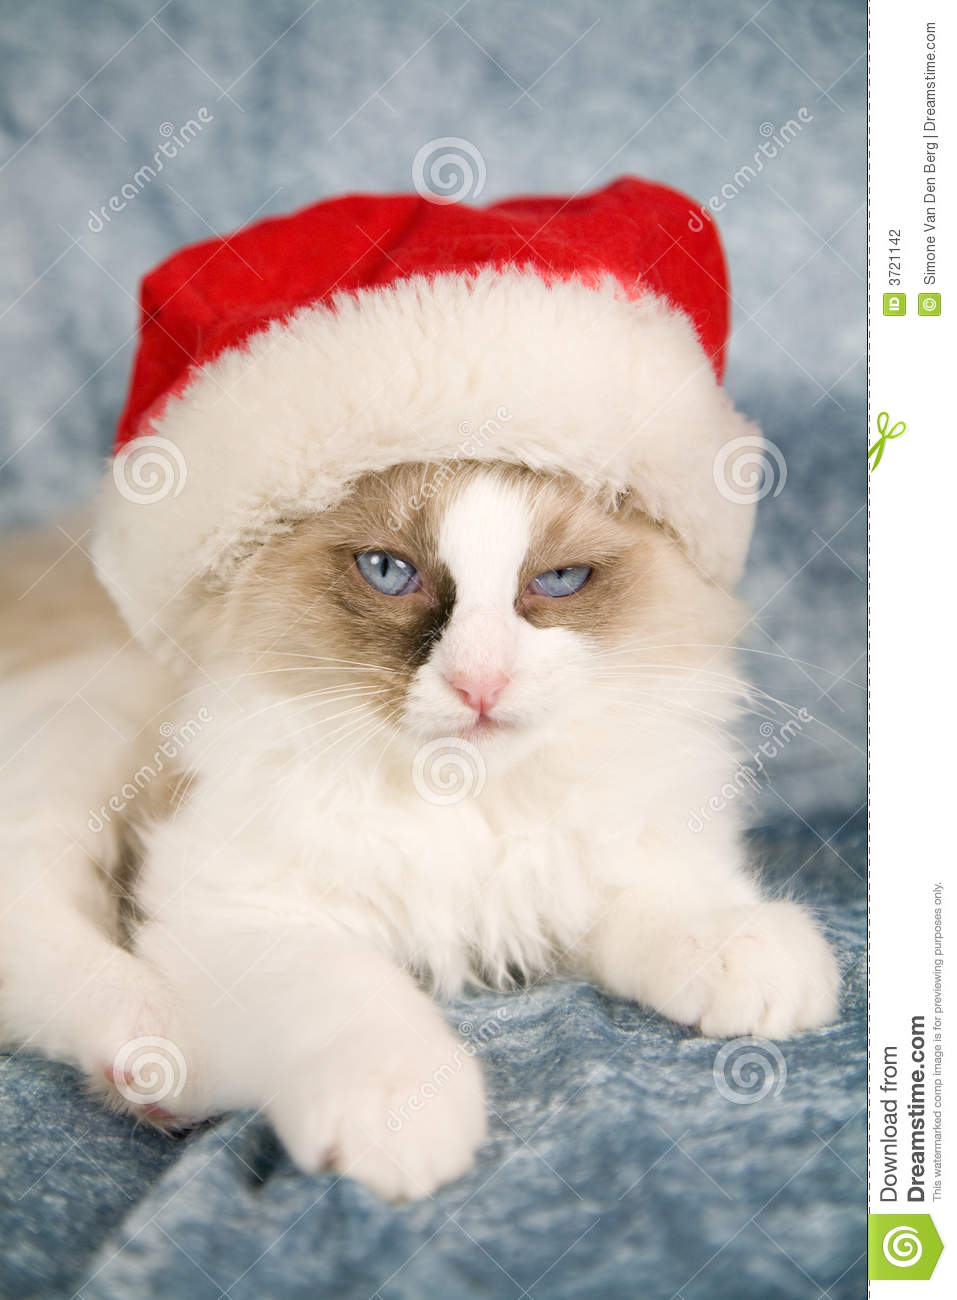 Little Ragdoll Kitten Looking Not Amused With Wearing A Santa Hat